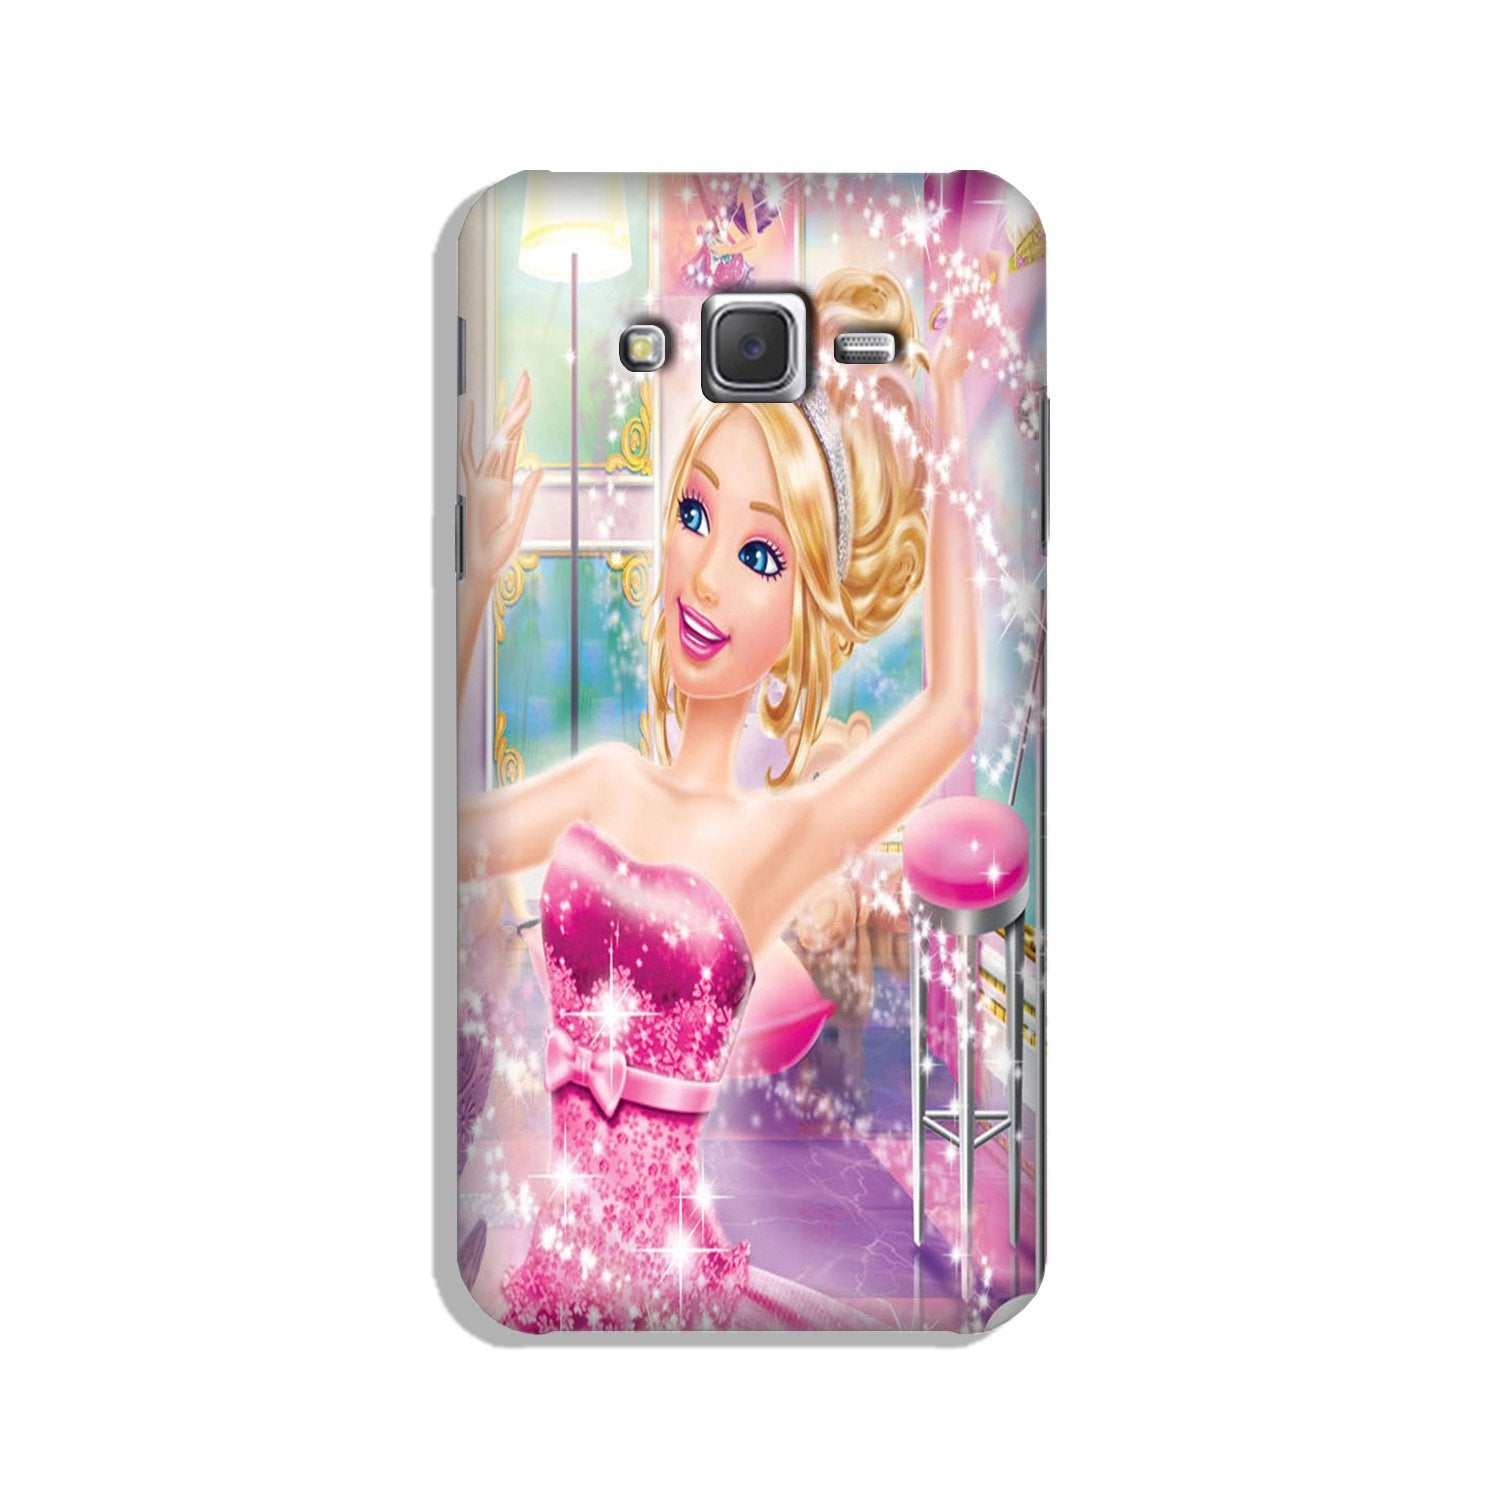 Princesses Case for Galaxy J5 (2015)